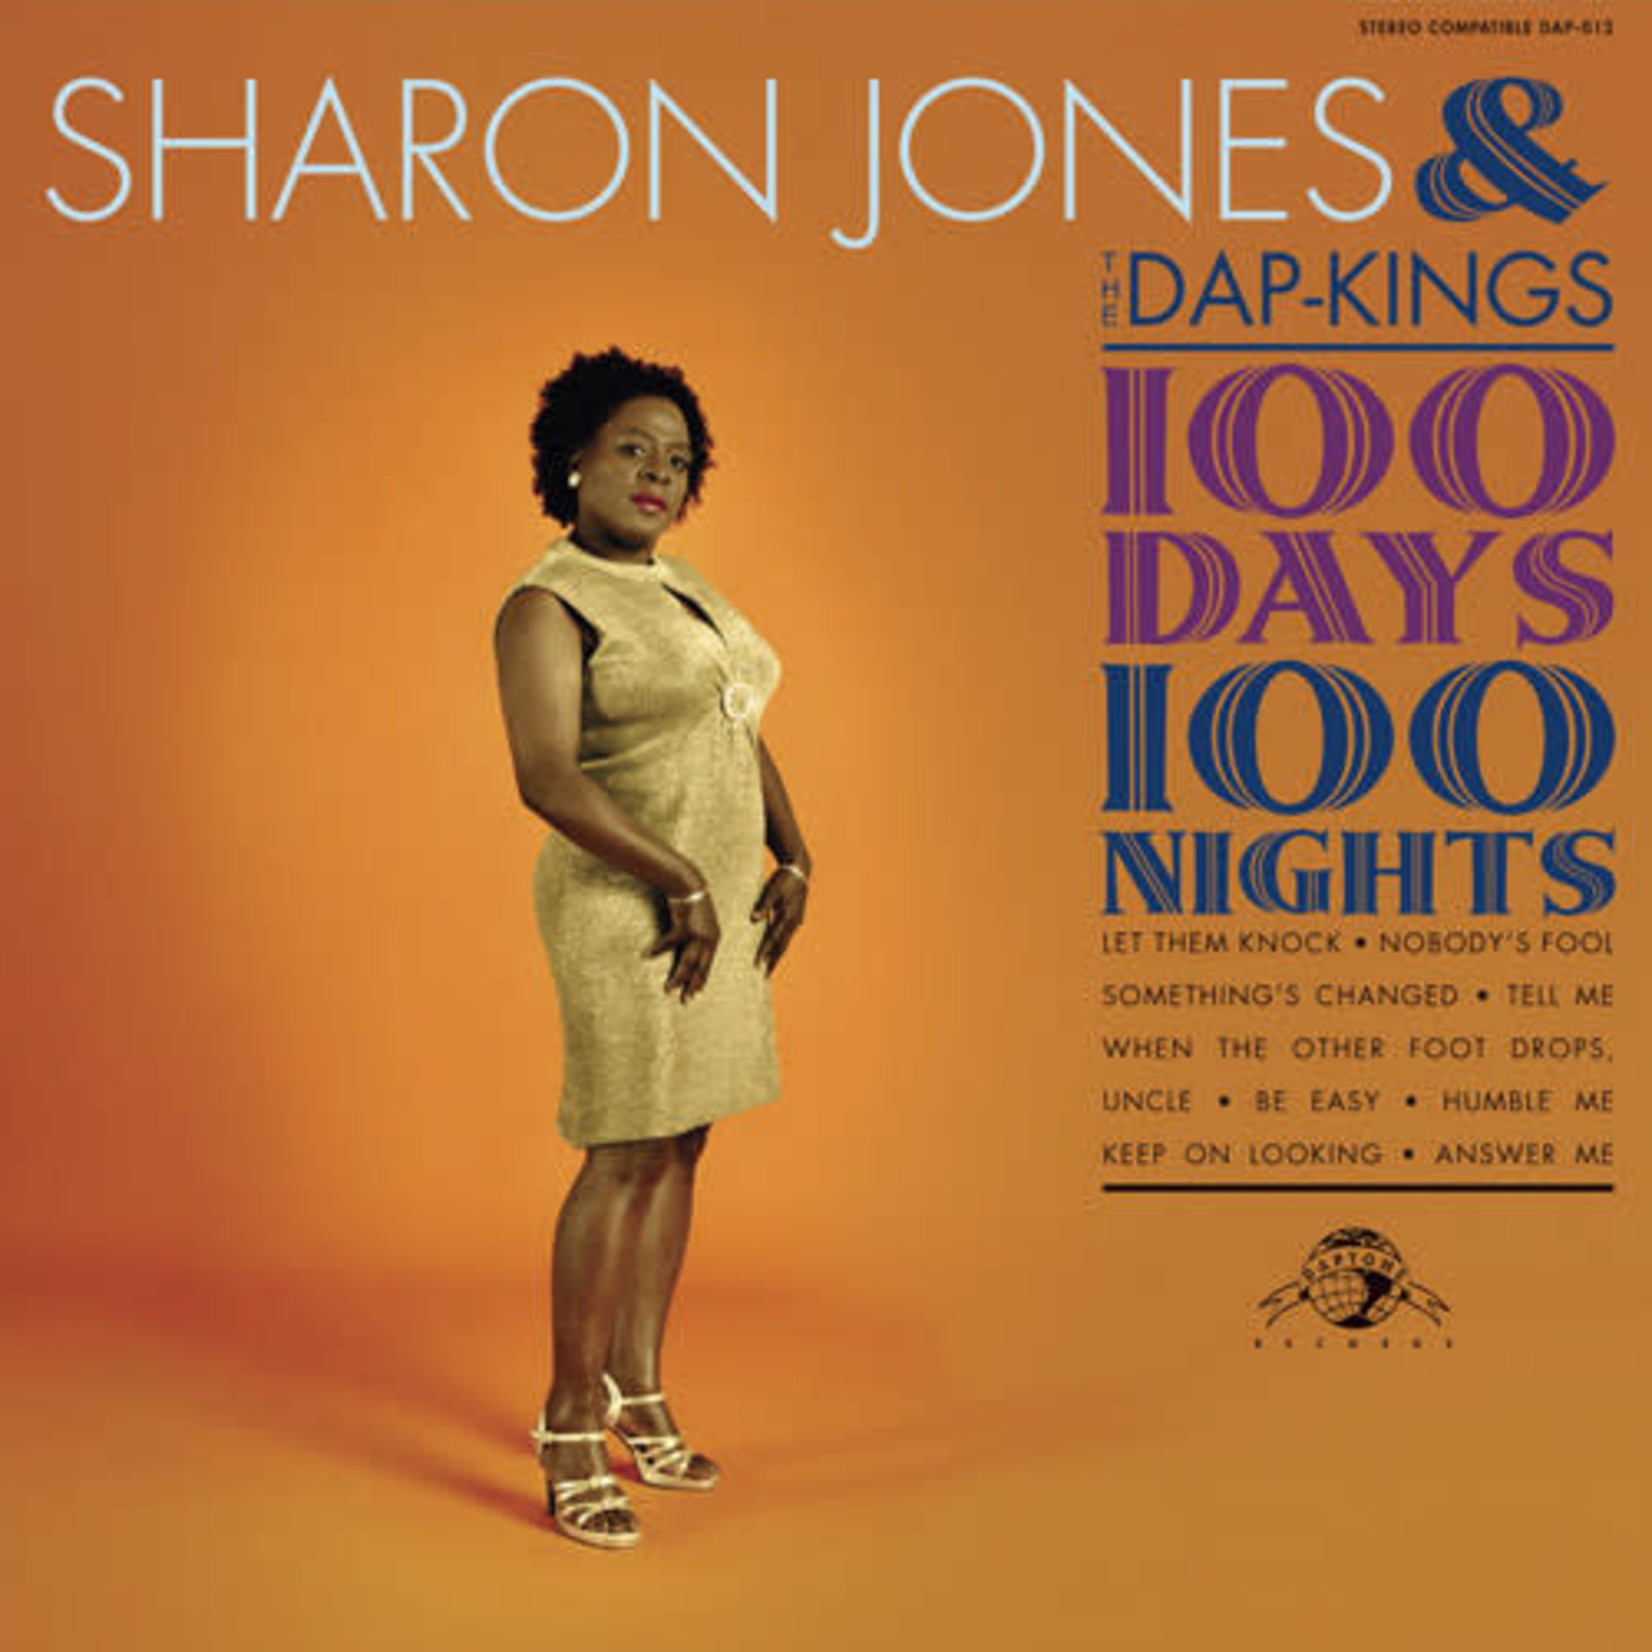 Sharon Jones & The Dap-Kings - 100 Days, 100 Nights [CD]